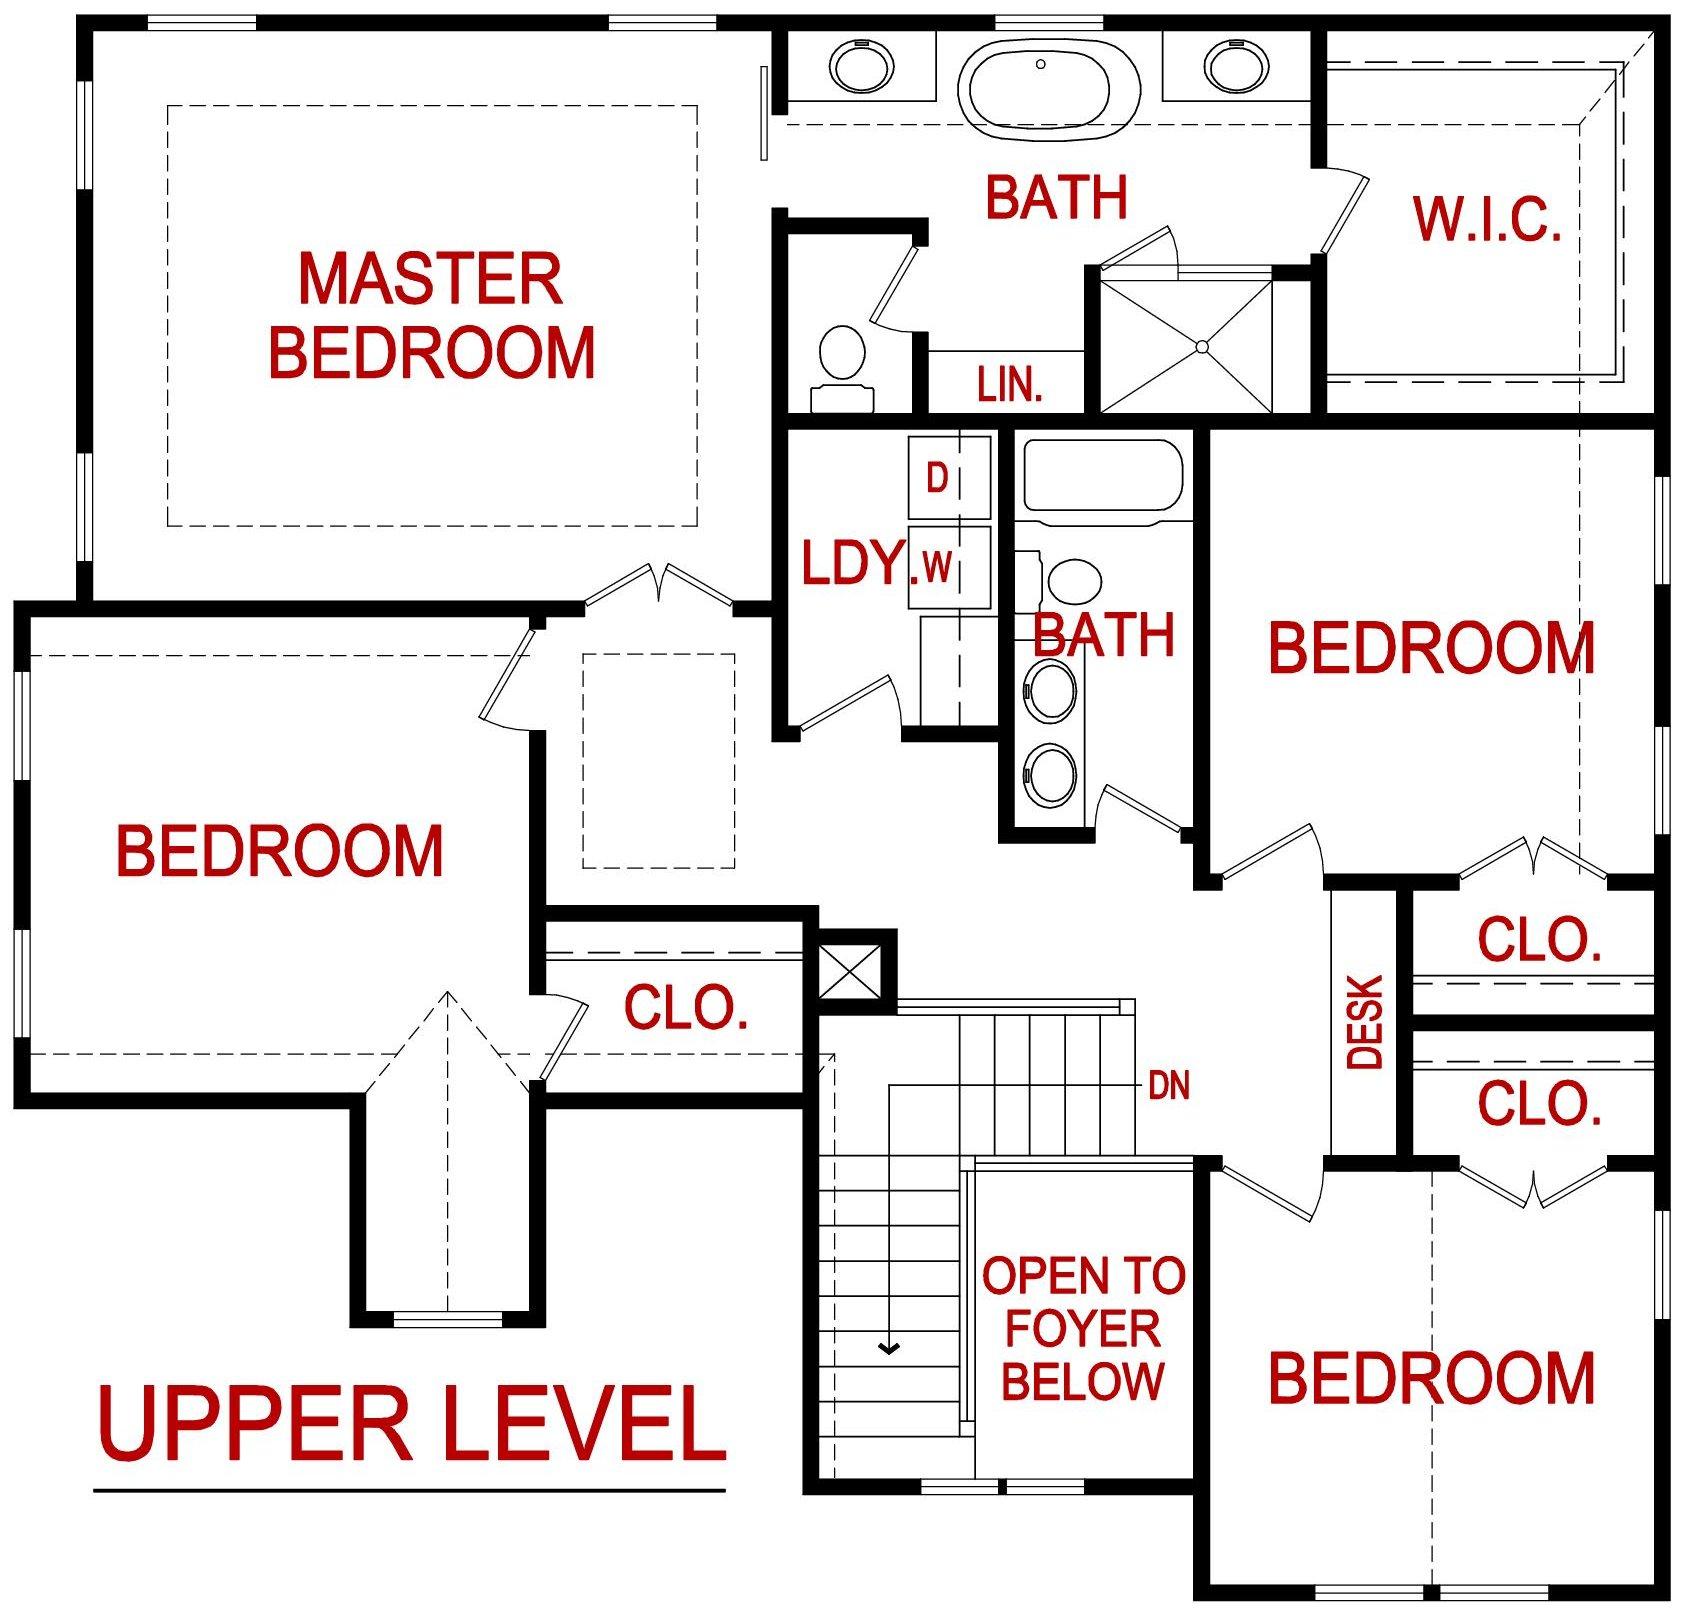 Upper level floor plan of 6422 W. 79th Ter. Prairie Village, KS from Lambie custom homes